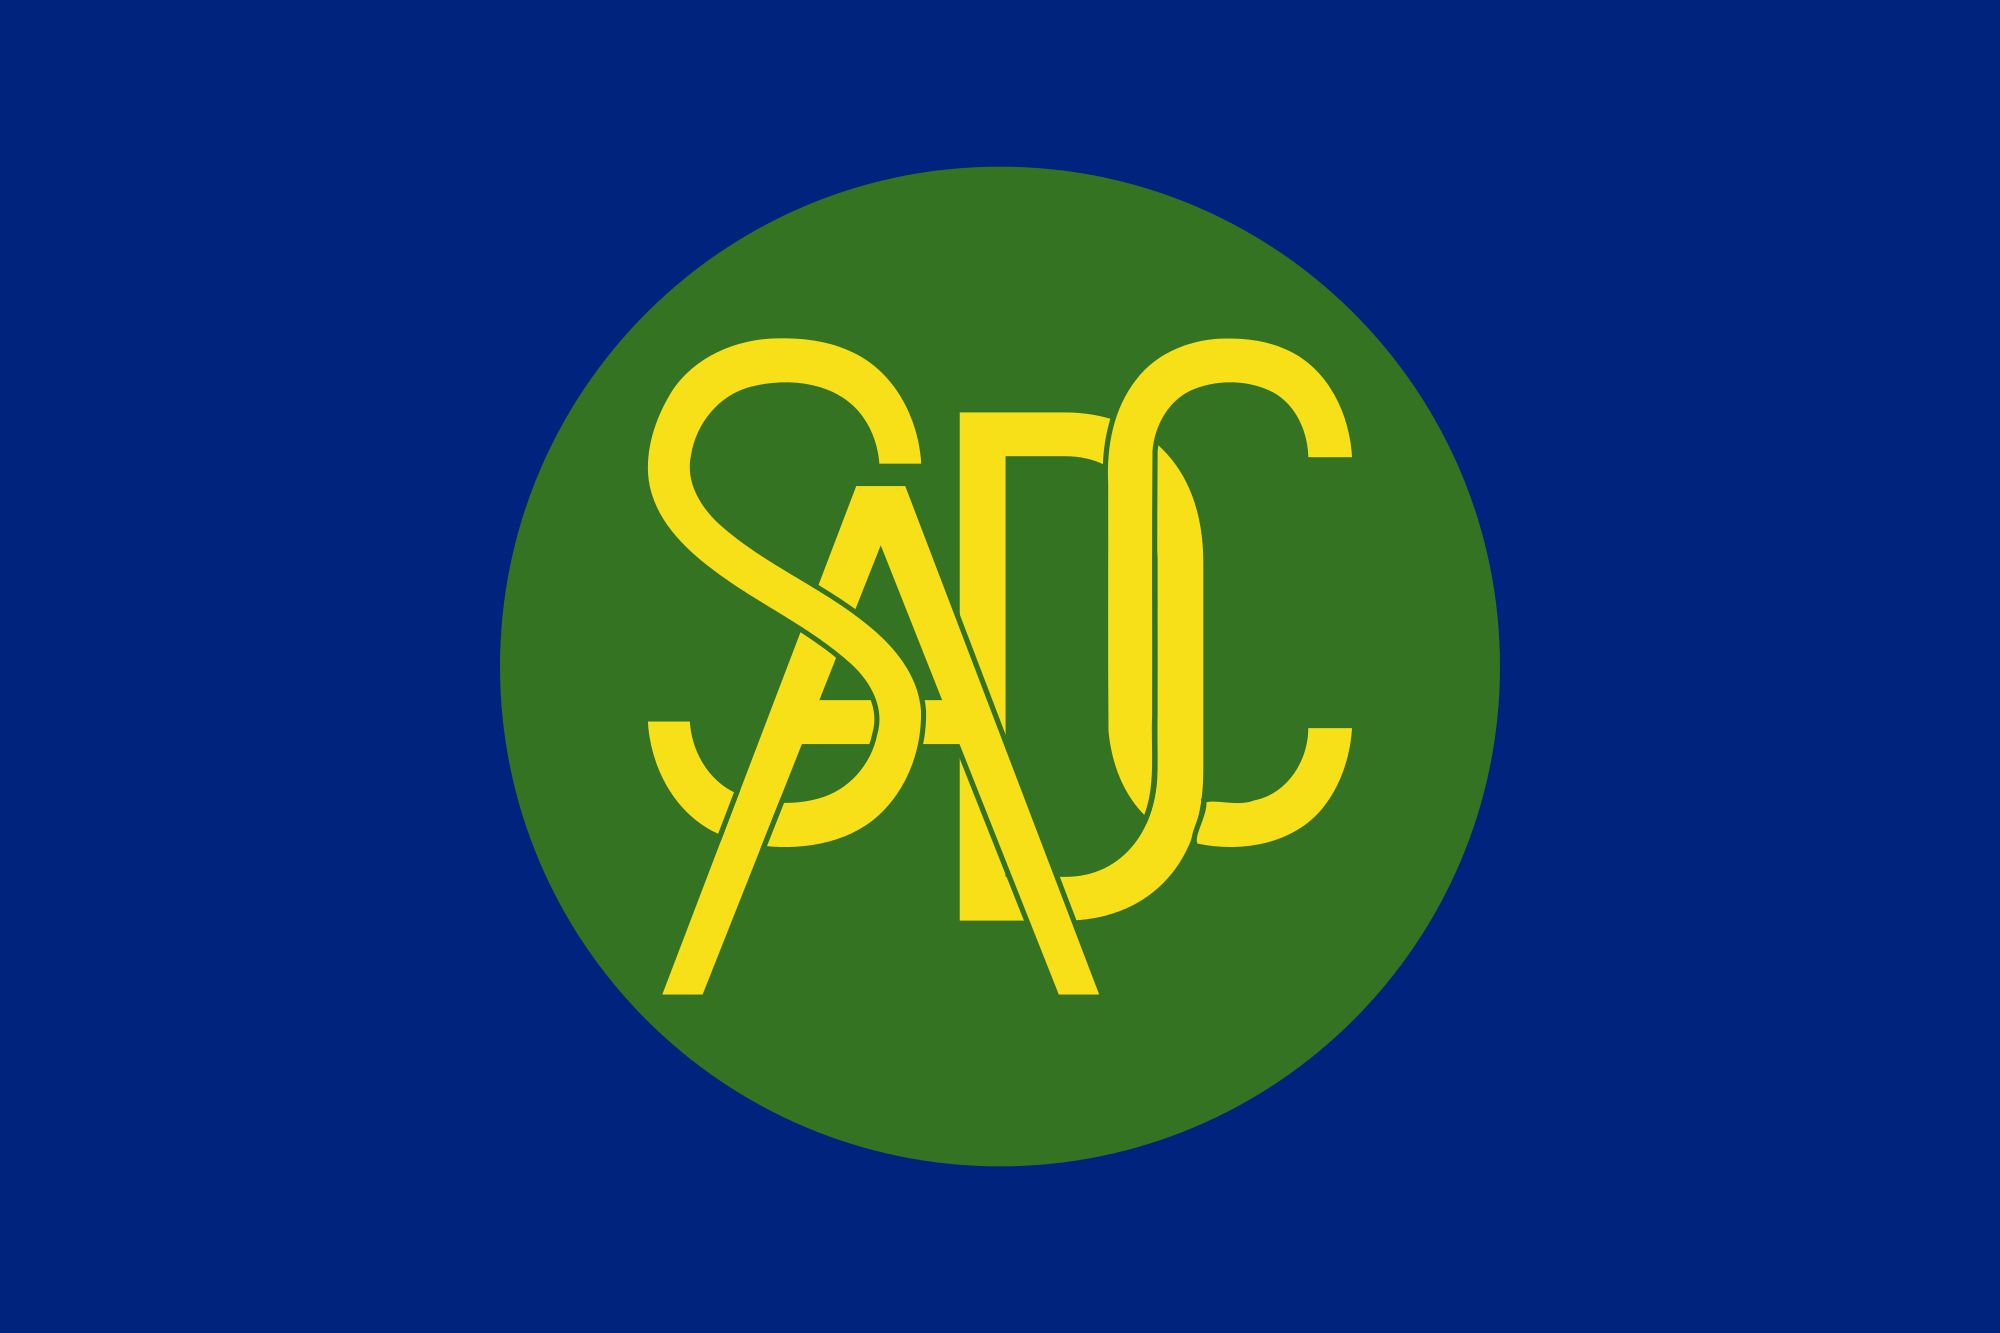 SADC Crests